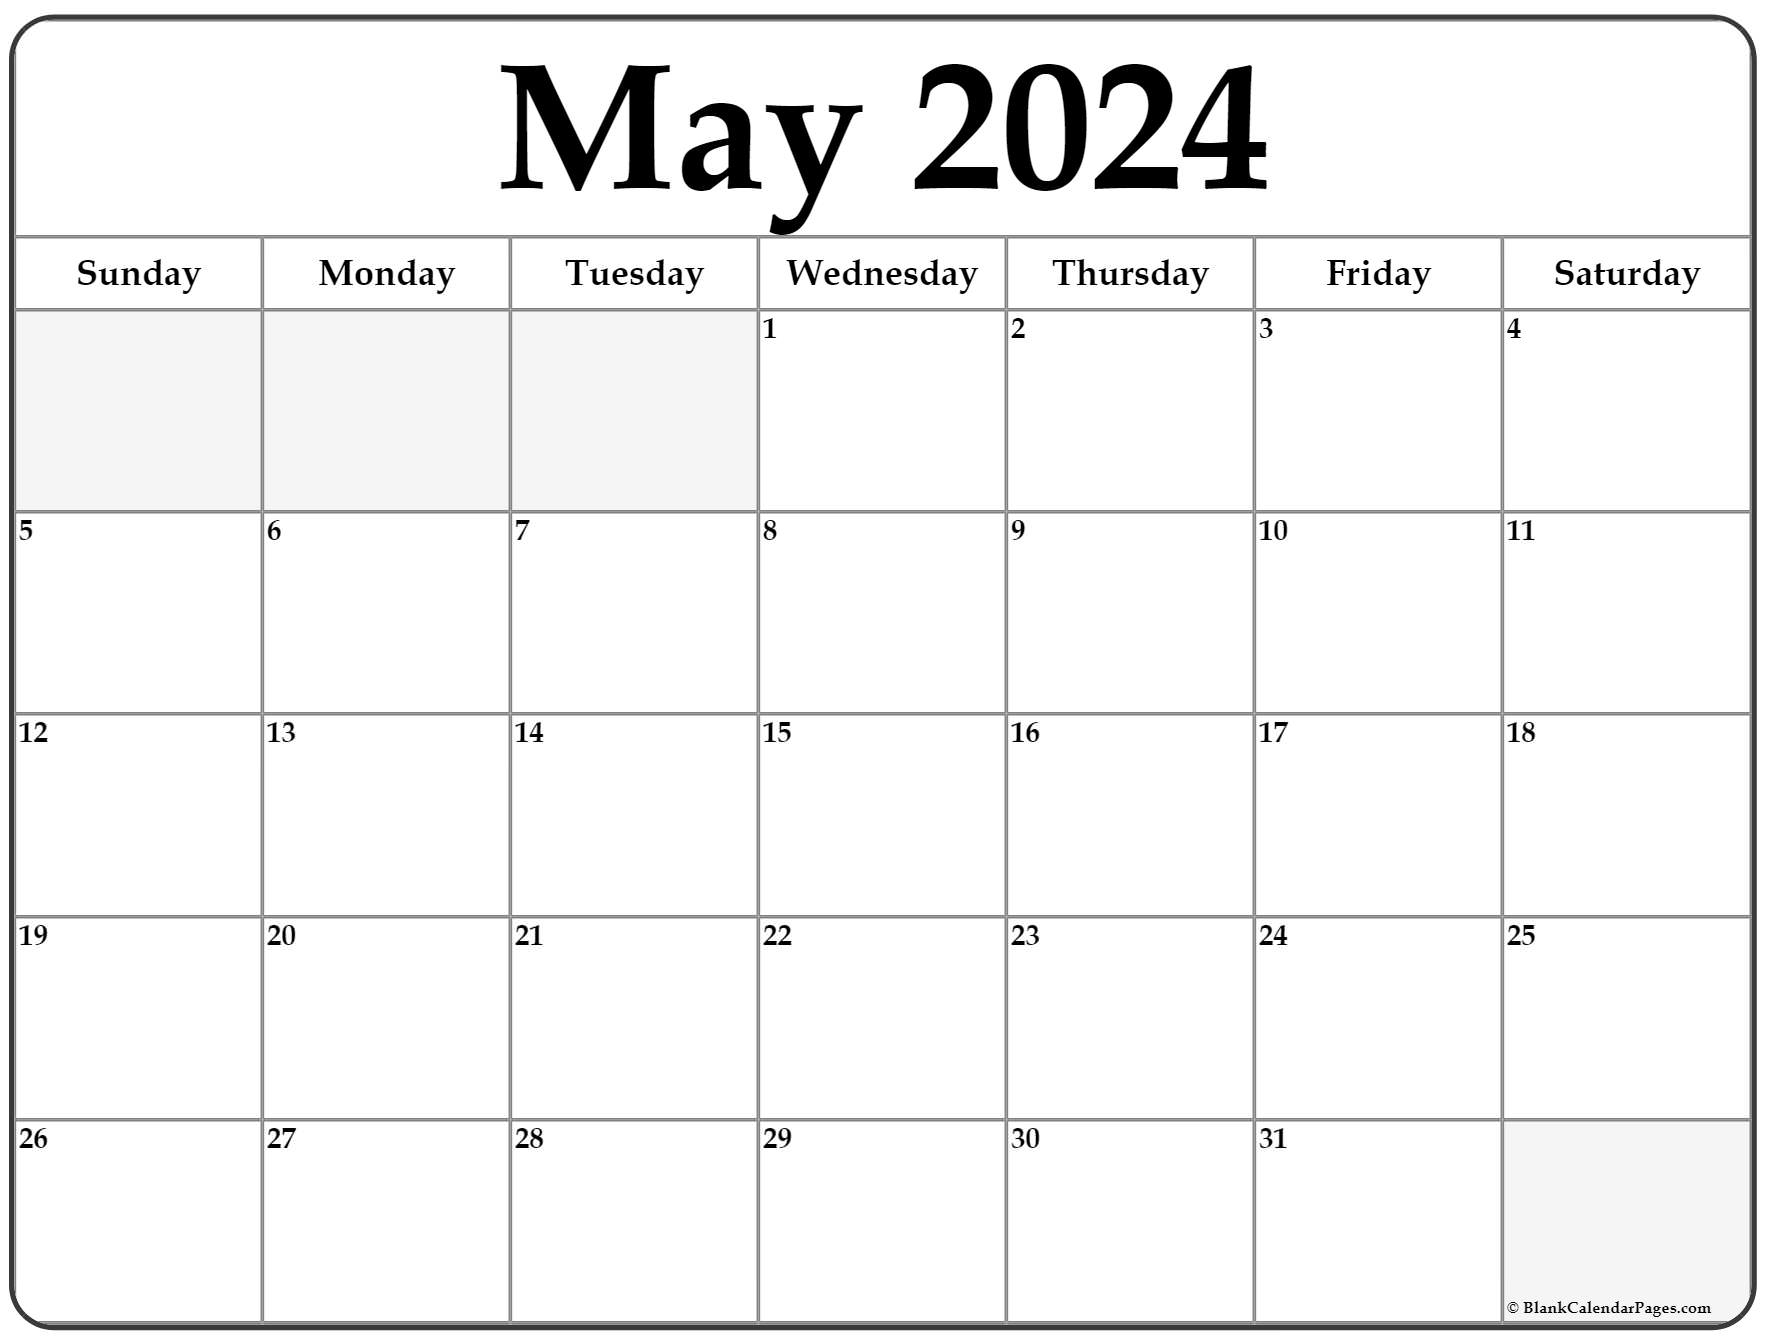 May 2024 Calendar | Free Printable Calendar for Free May Printable Calendar 2024